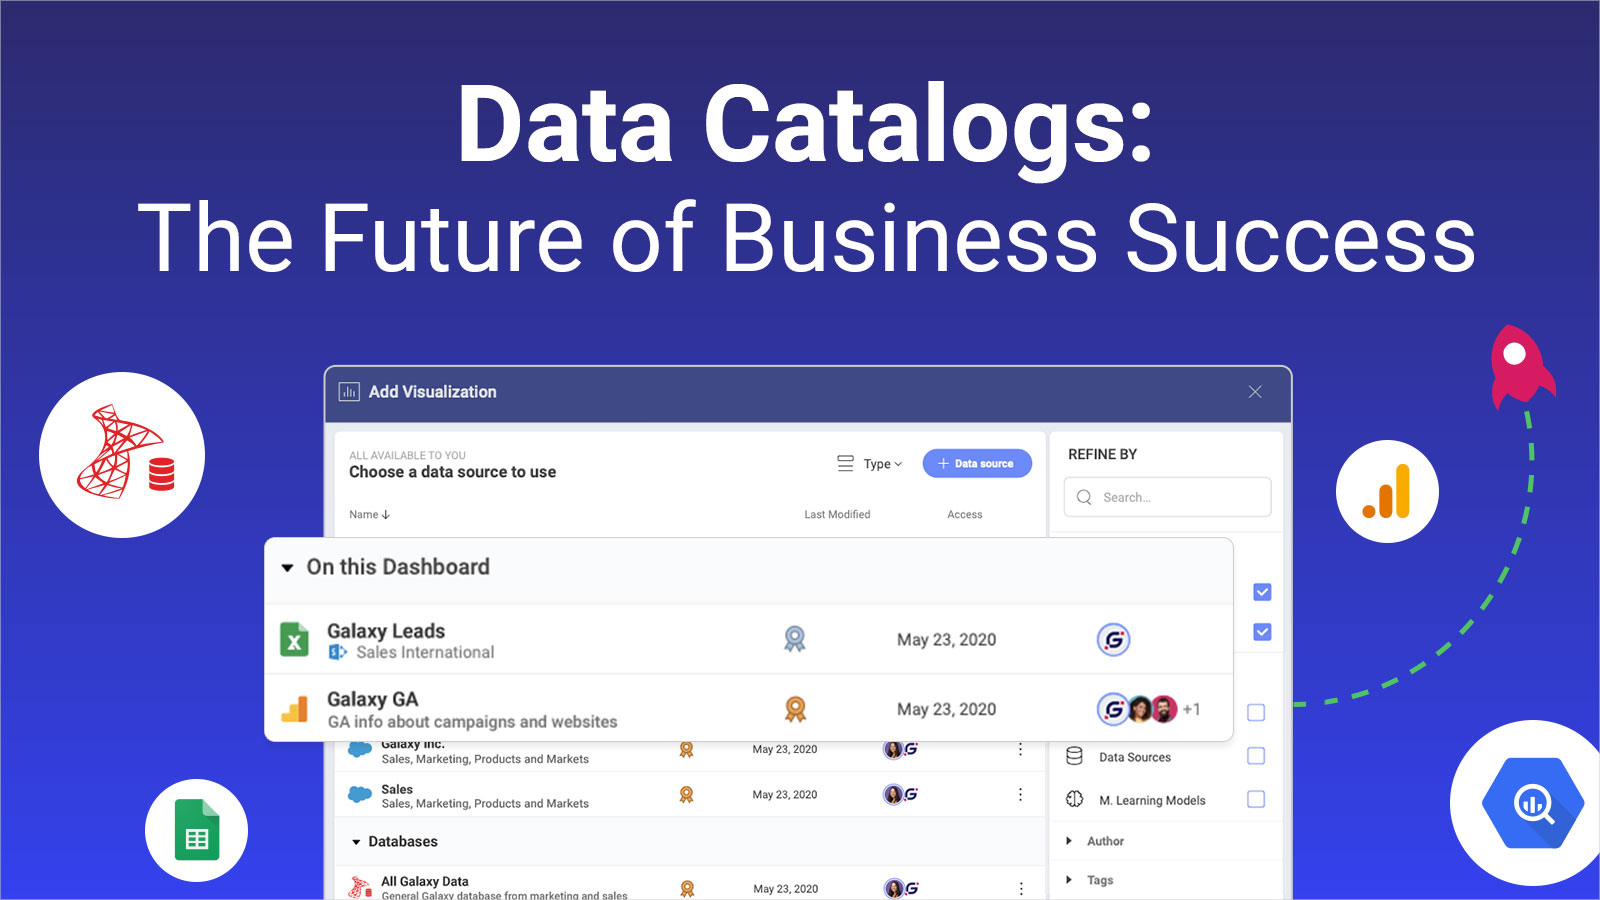 Data Catalogs: The Future of Business Success